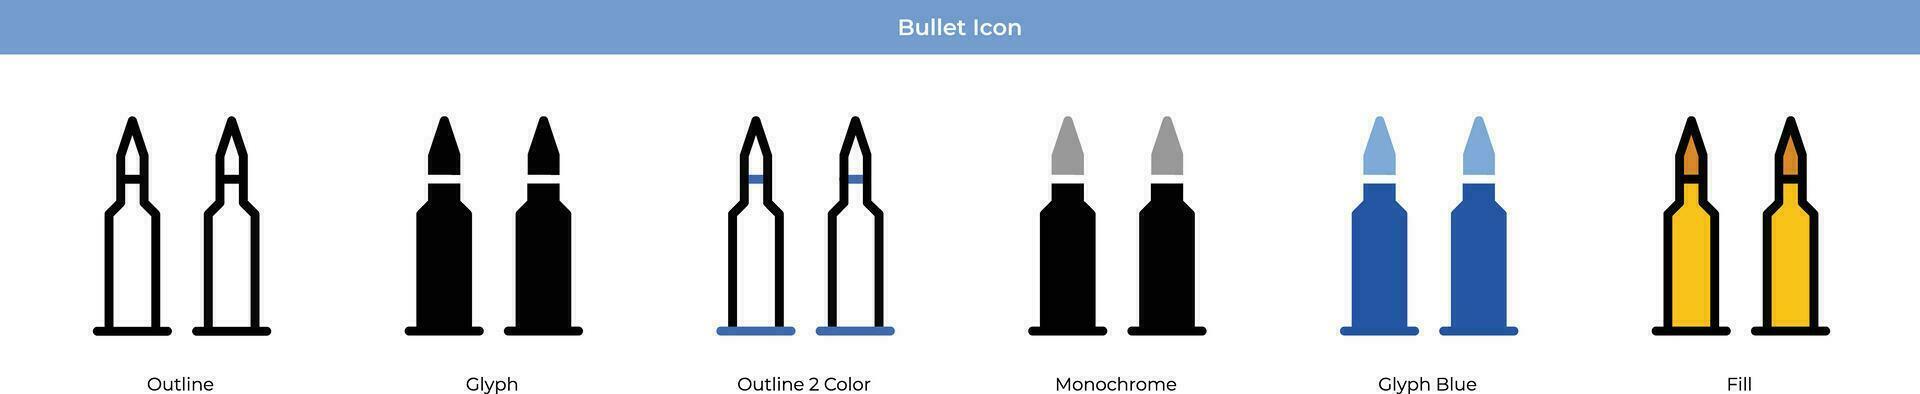 Bullet Icon Set Vector